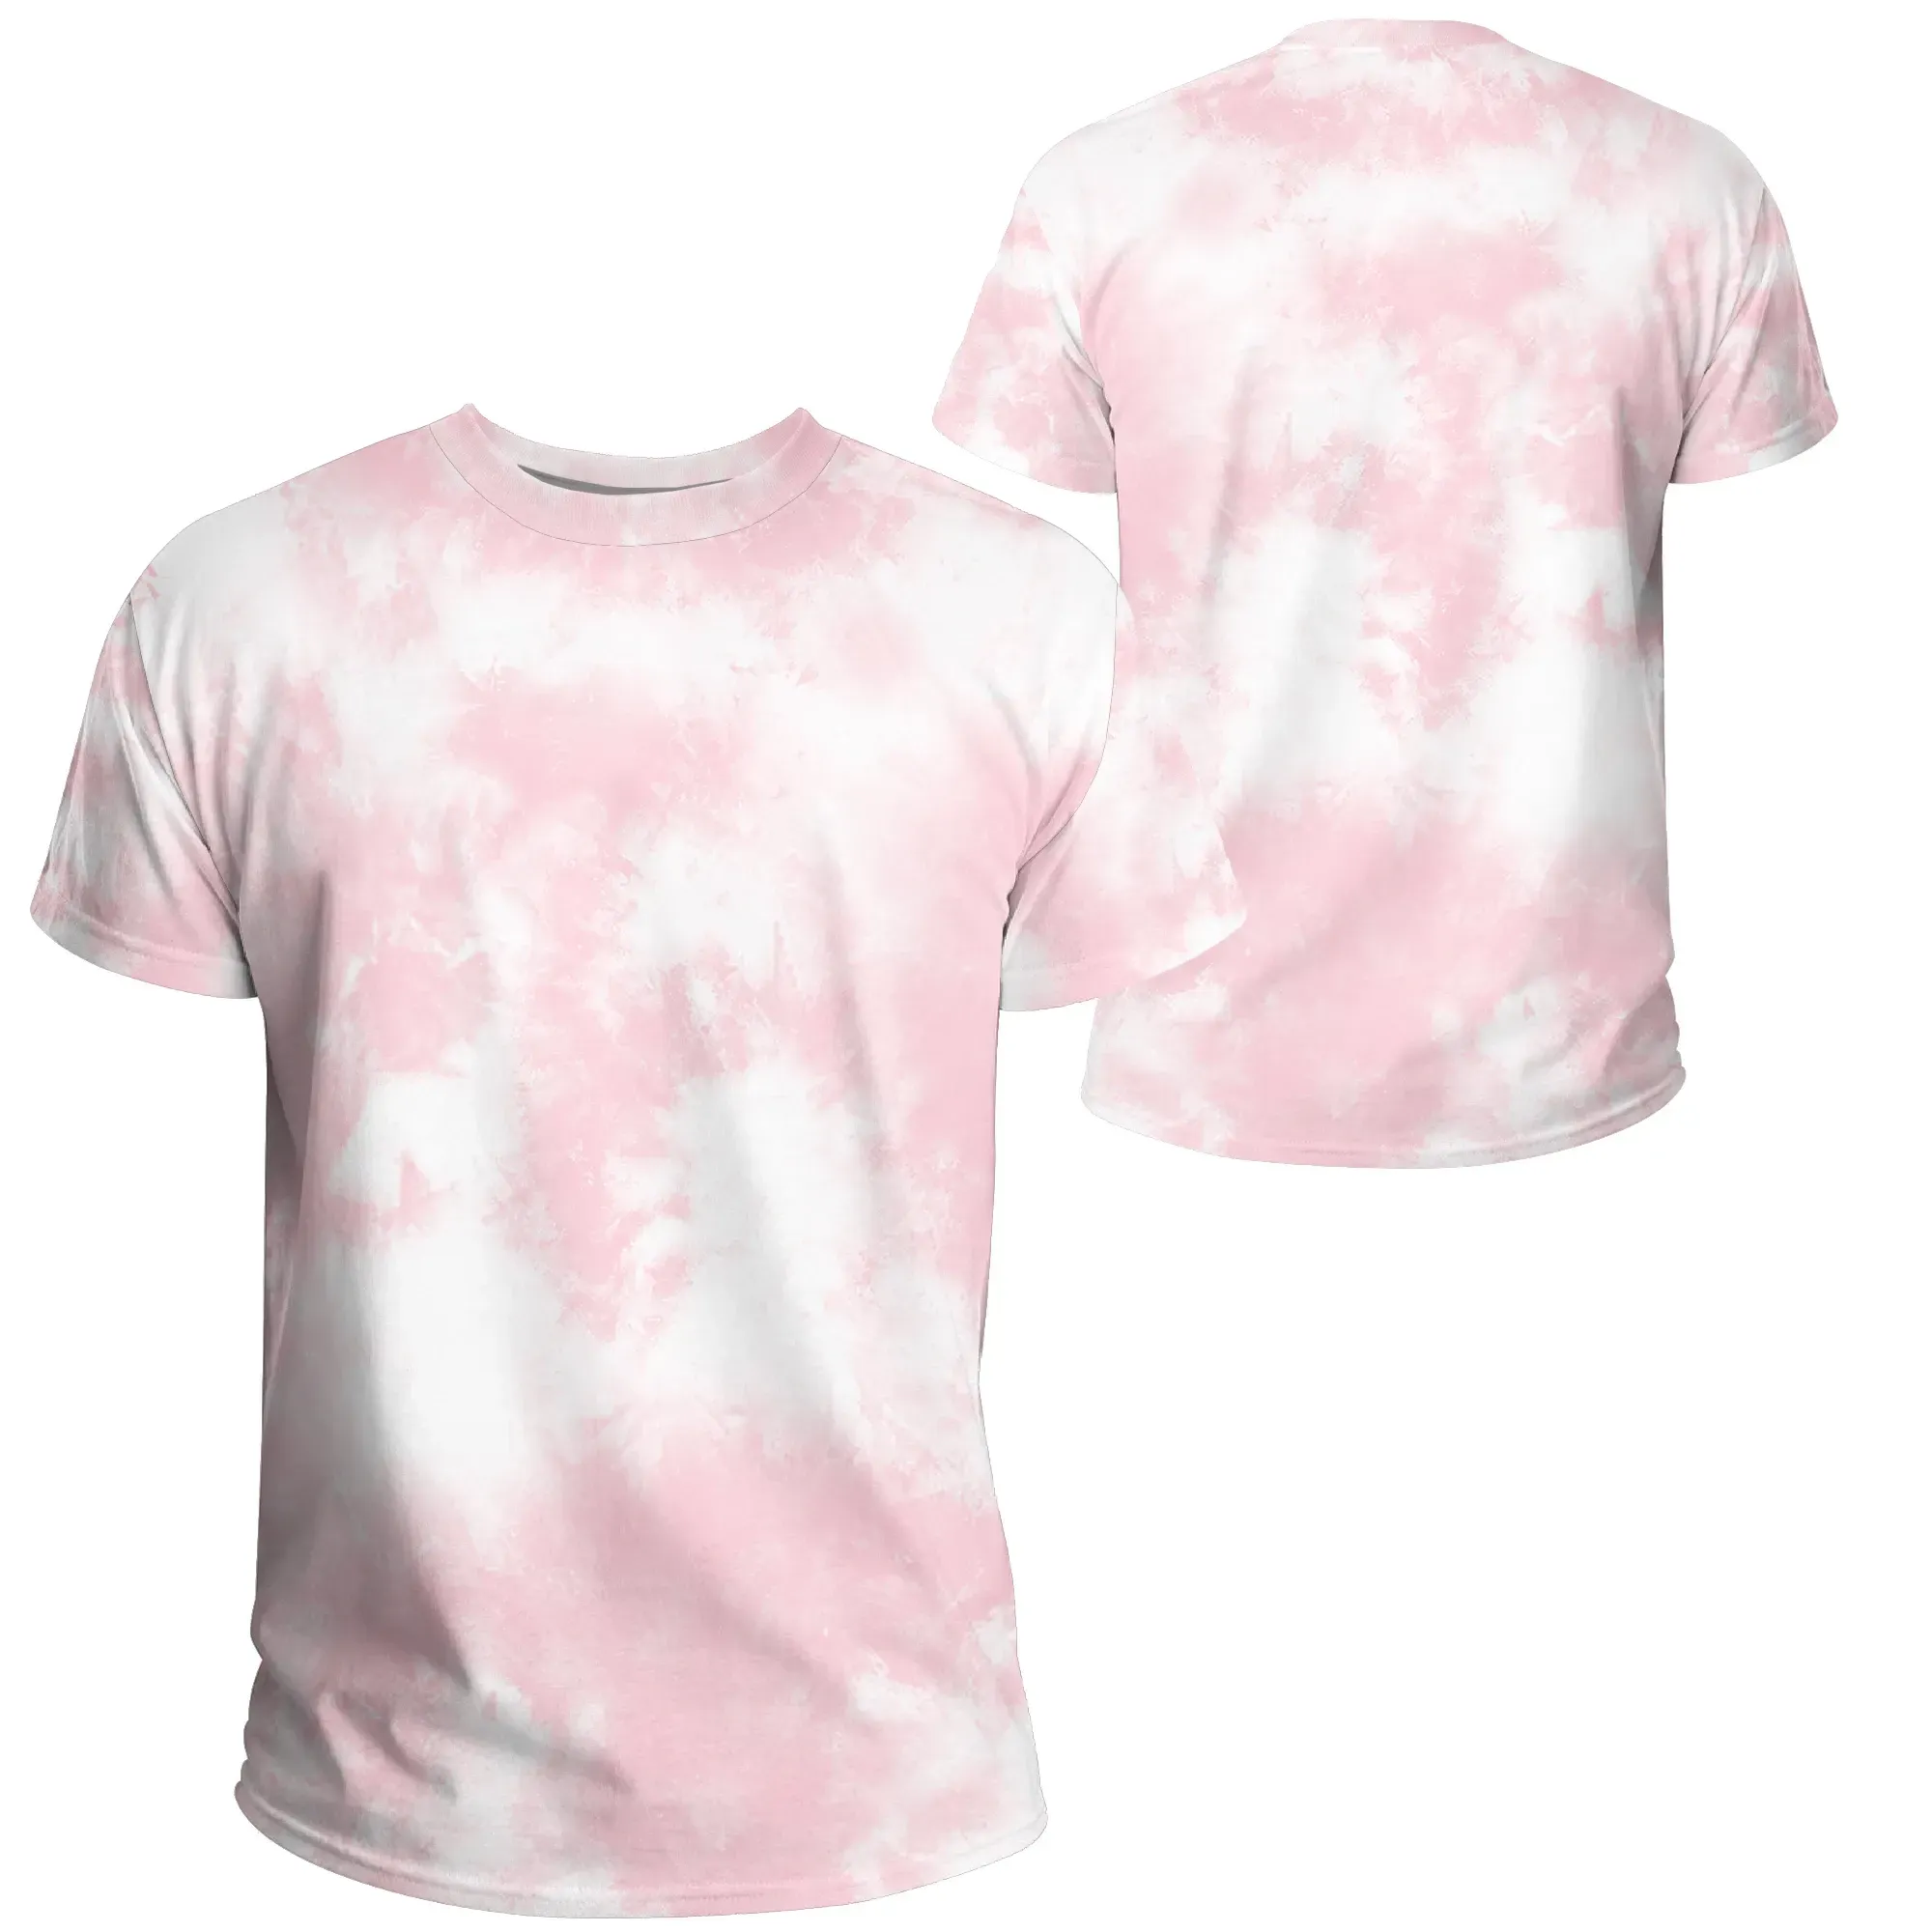 African T-shirt – Pink Tie Dye Tee